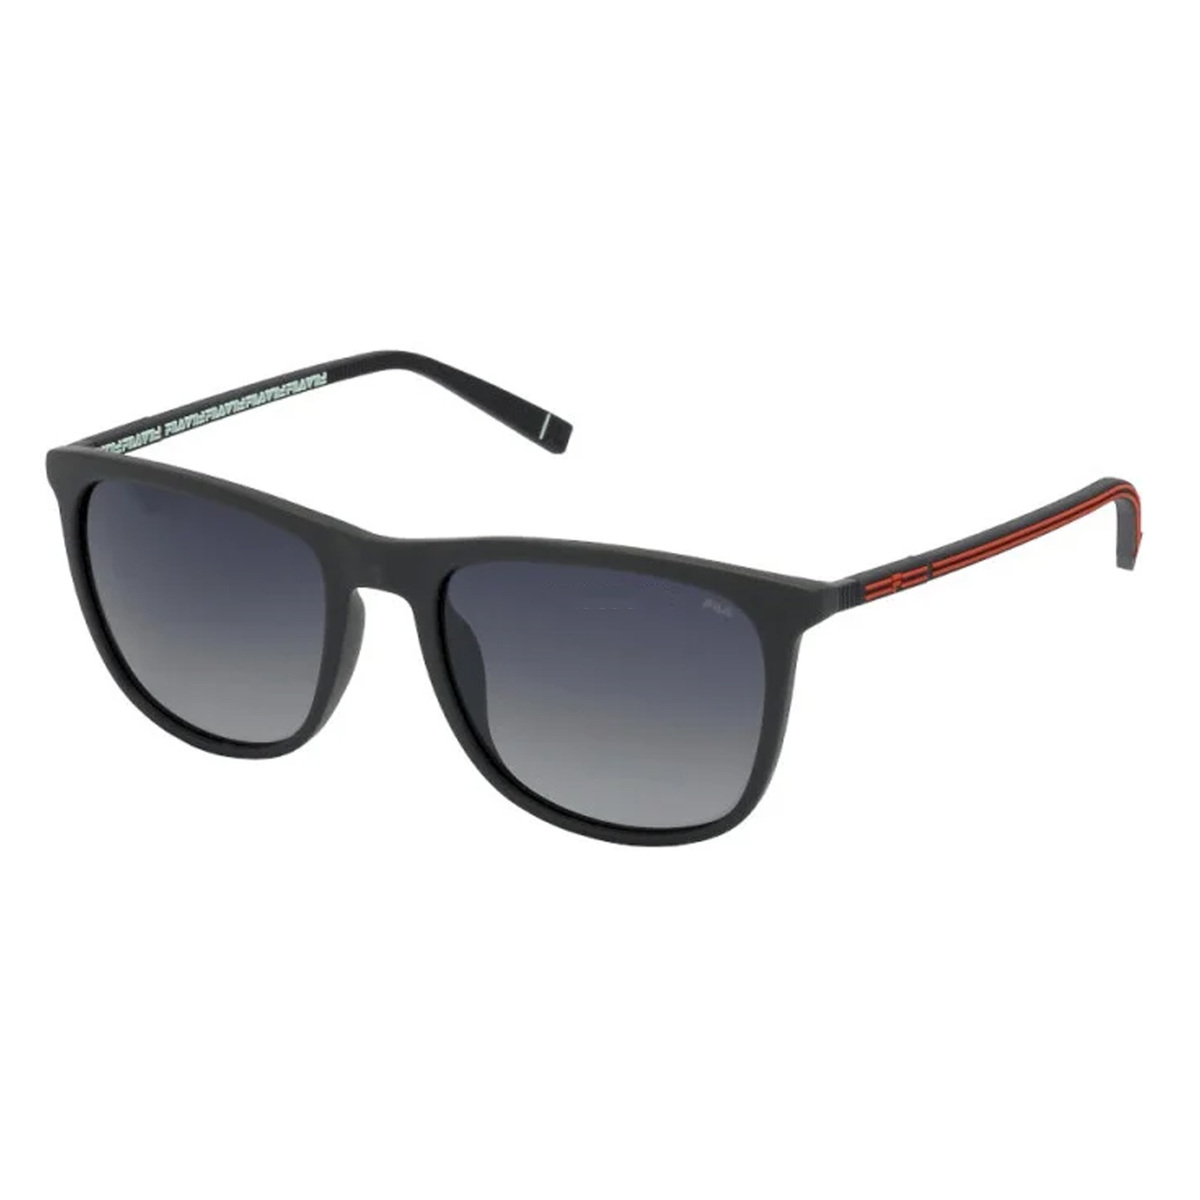 Fila Men's Square Sunglasses, Smoke Gradient, 095 55507P Sqr Gry